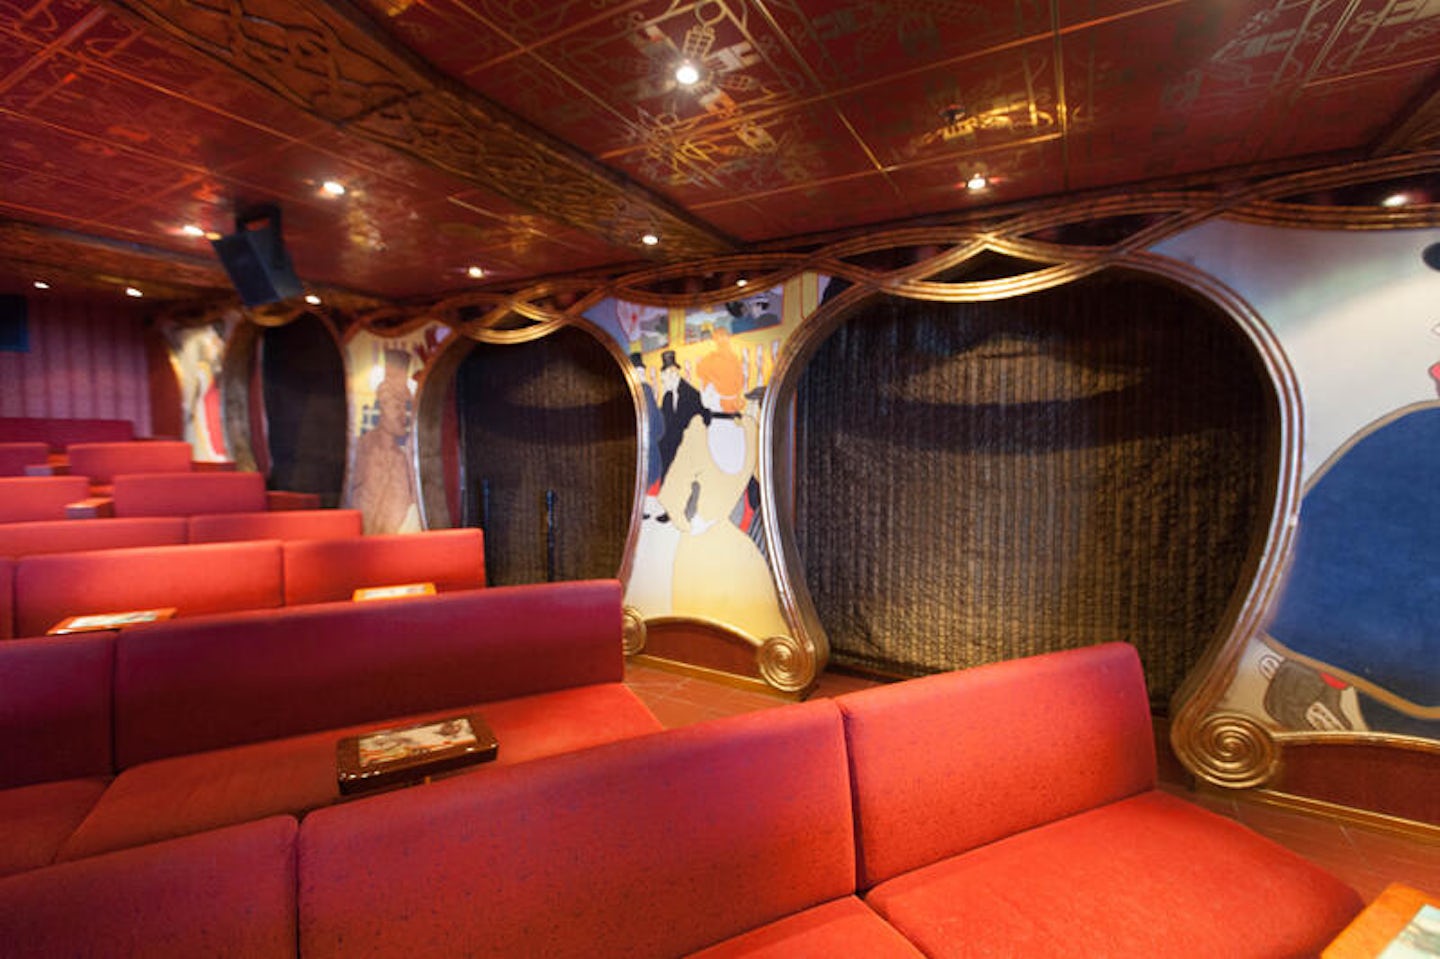 Touluse-Lautrec Main Show Lounge on Carnival Conquest